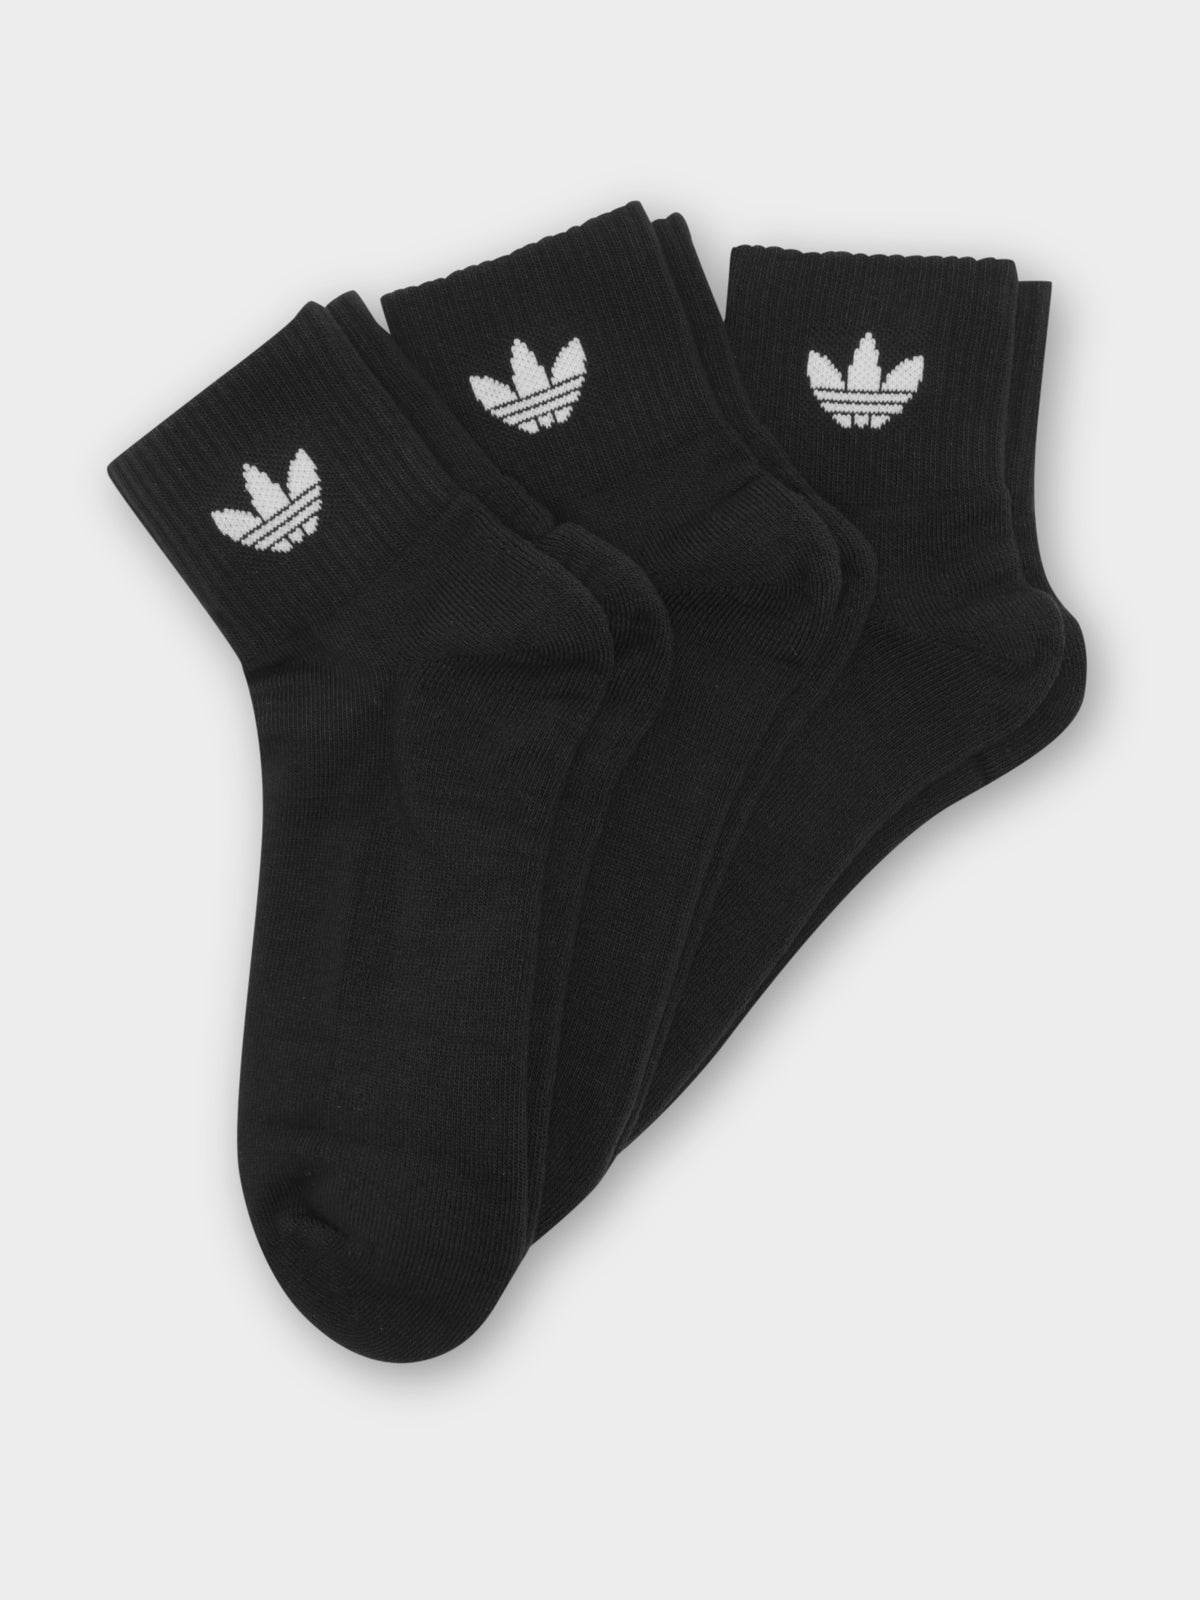 3 Pairs of Mid Ankle Socks in Black &amp; White